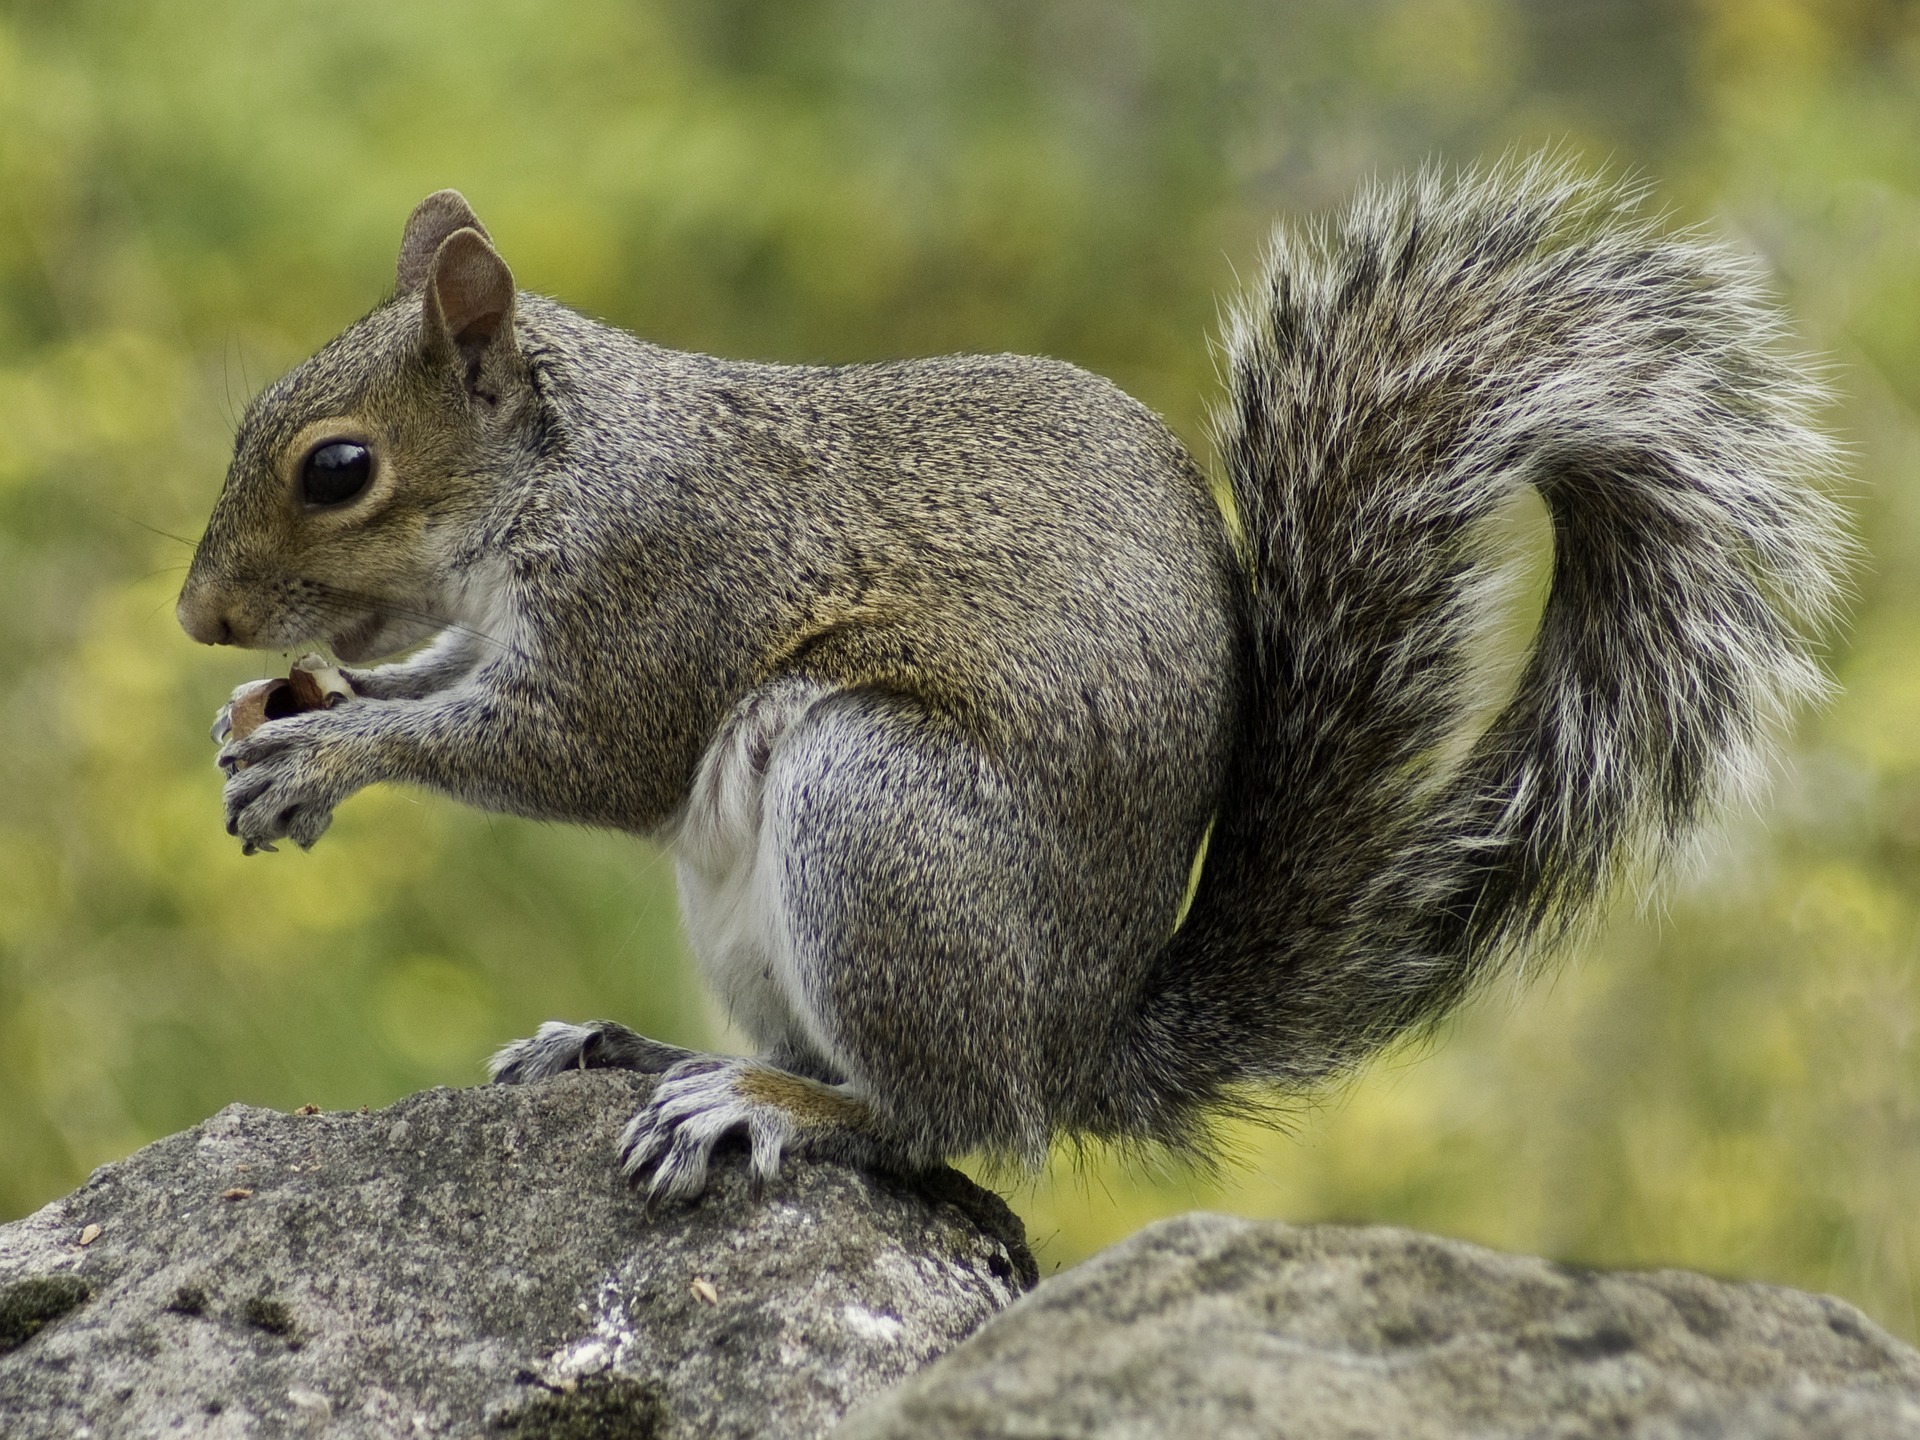 Squirrel Sitting on Rock